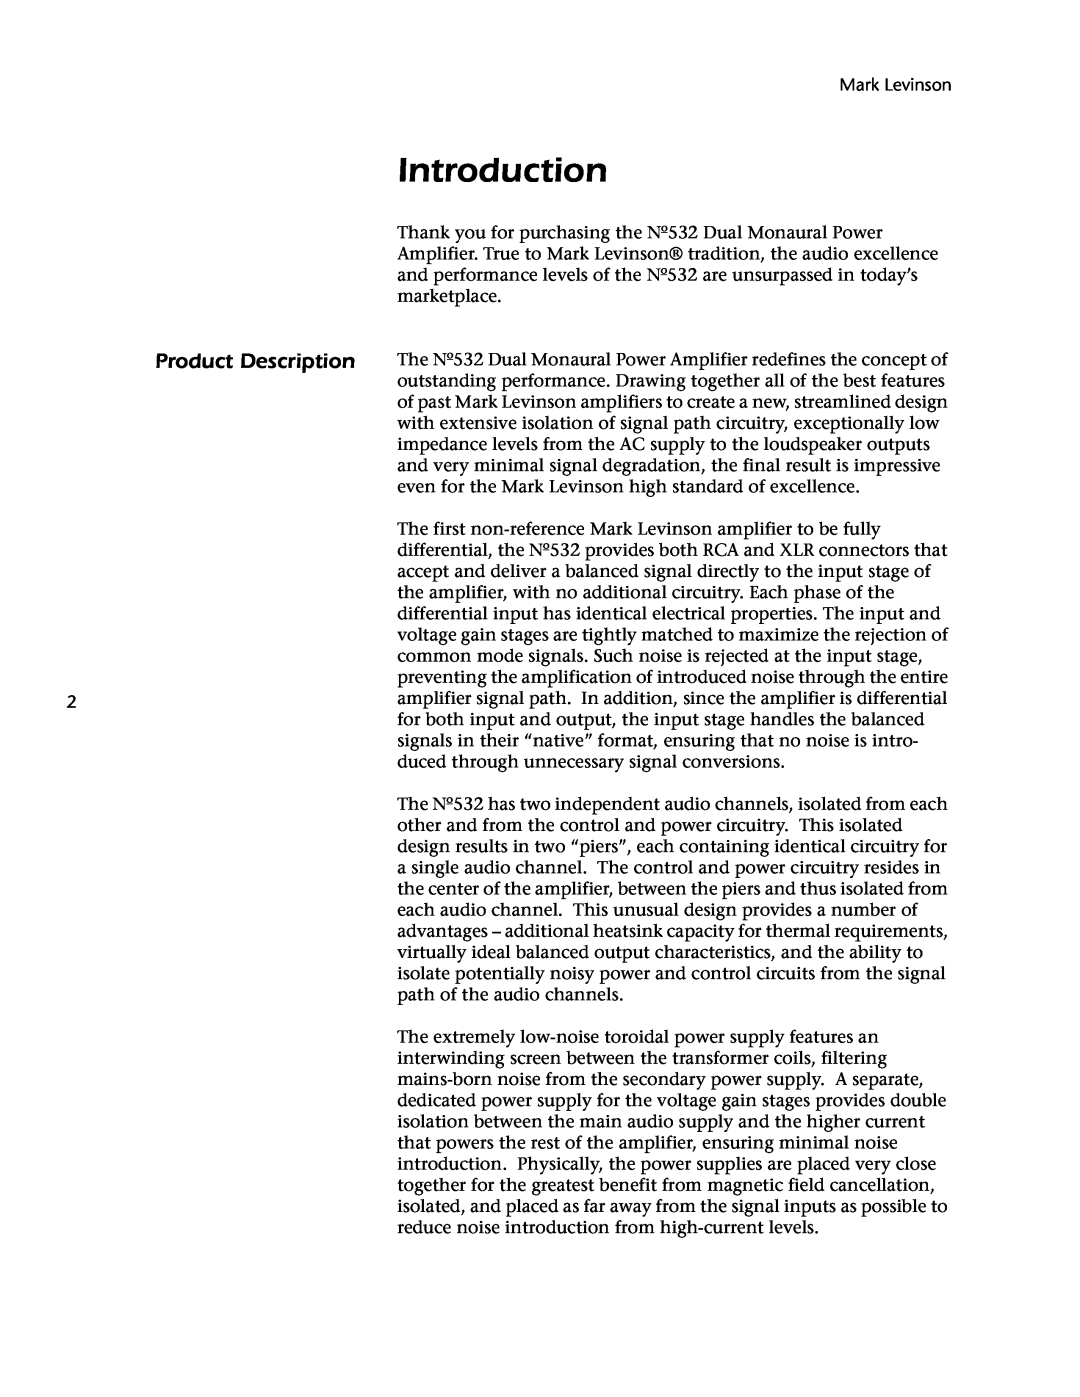 Mark Levinson 532 owner manual Introduction, Product Description 